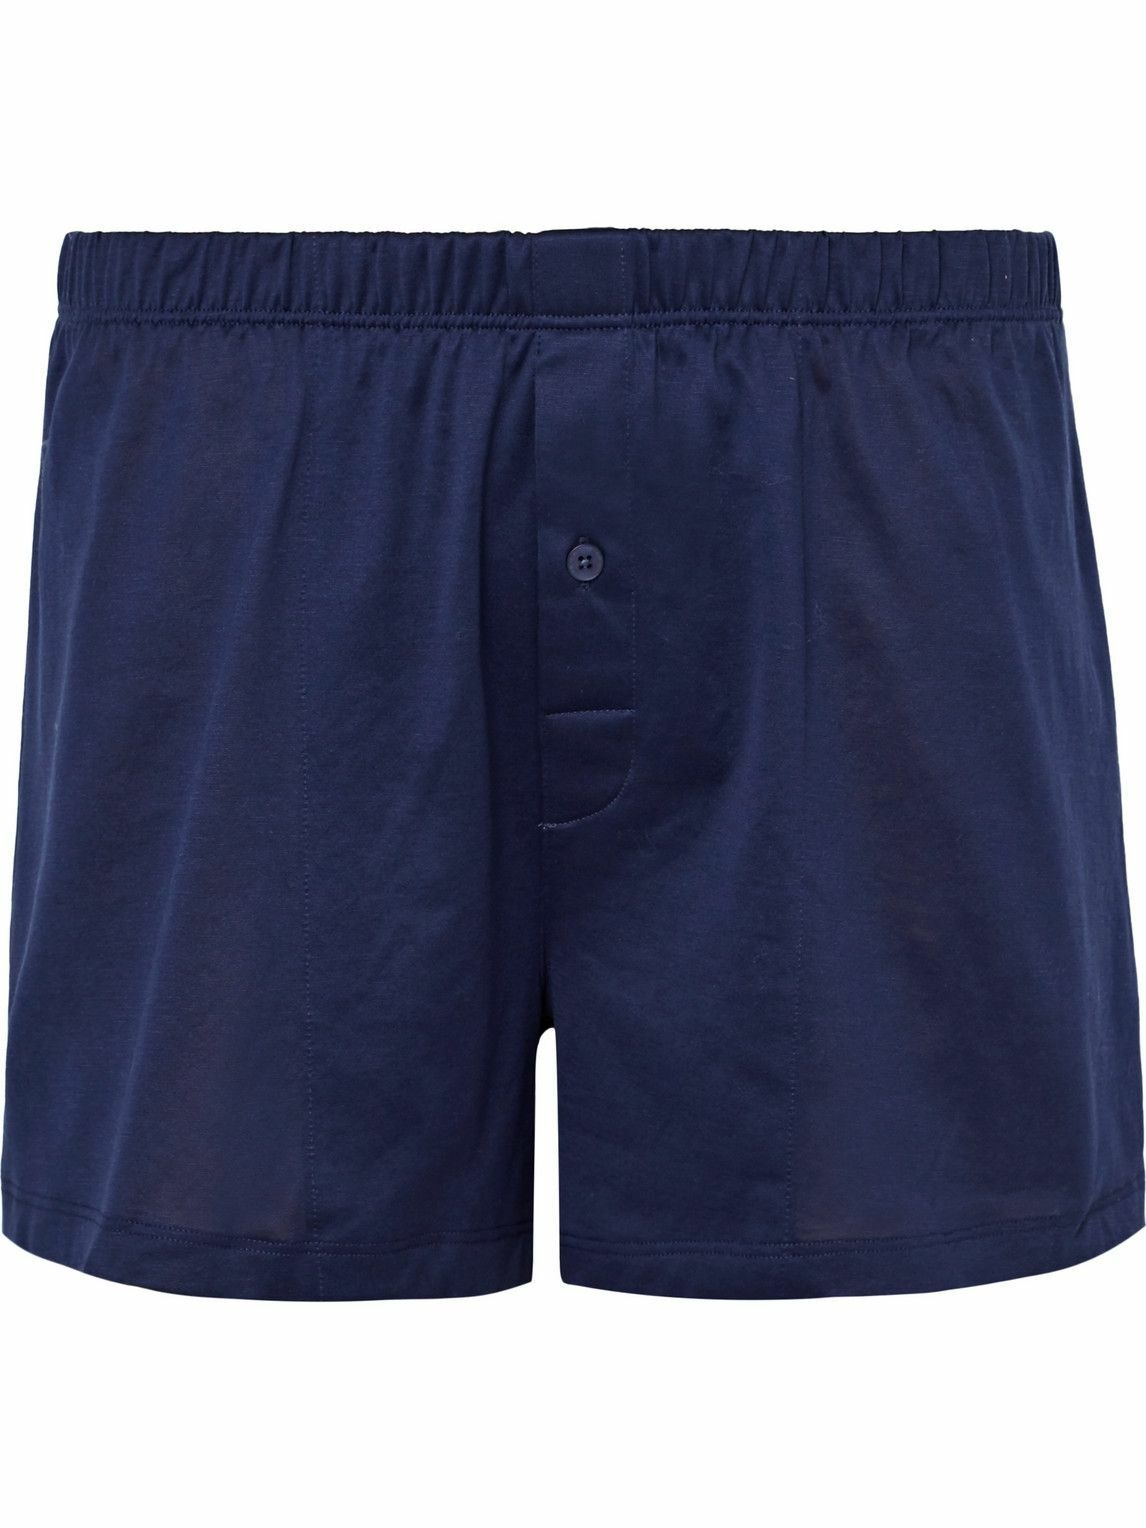 Photo: Hanro - Sporty Mercerised Cotton Boxer Shorts - Blue